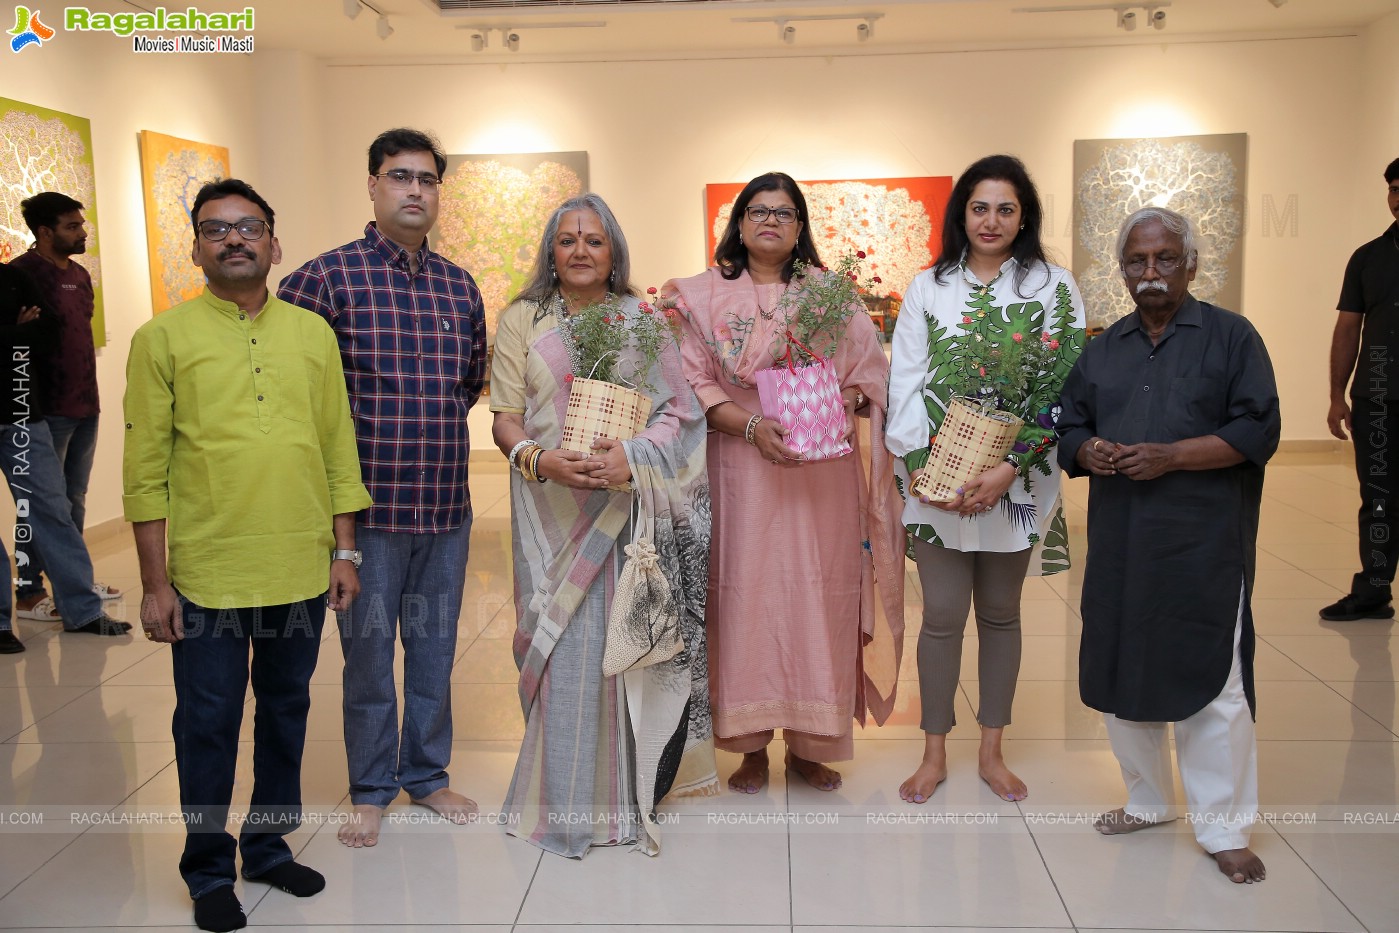 'Vriksha' - Painting Exhibition at State Art Gallery, Hyderabad